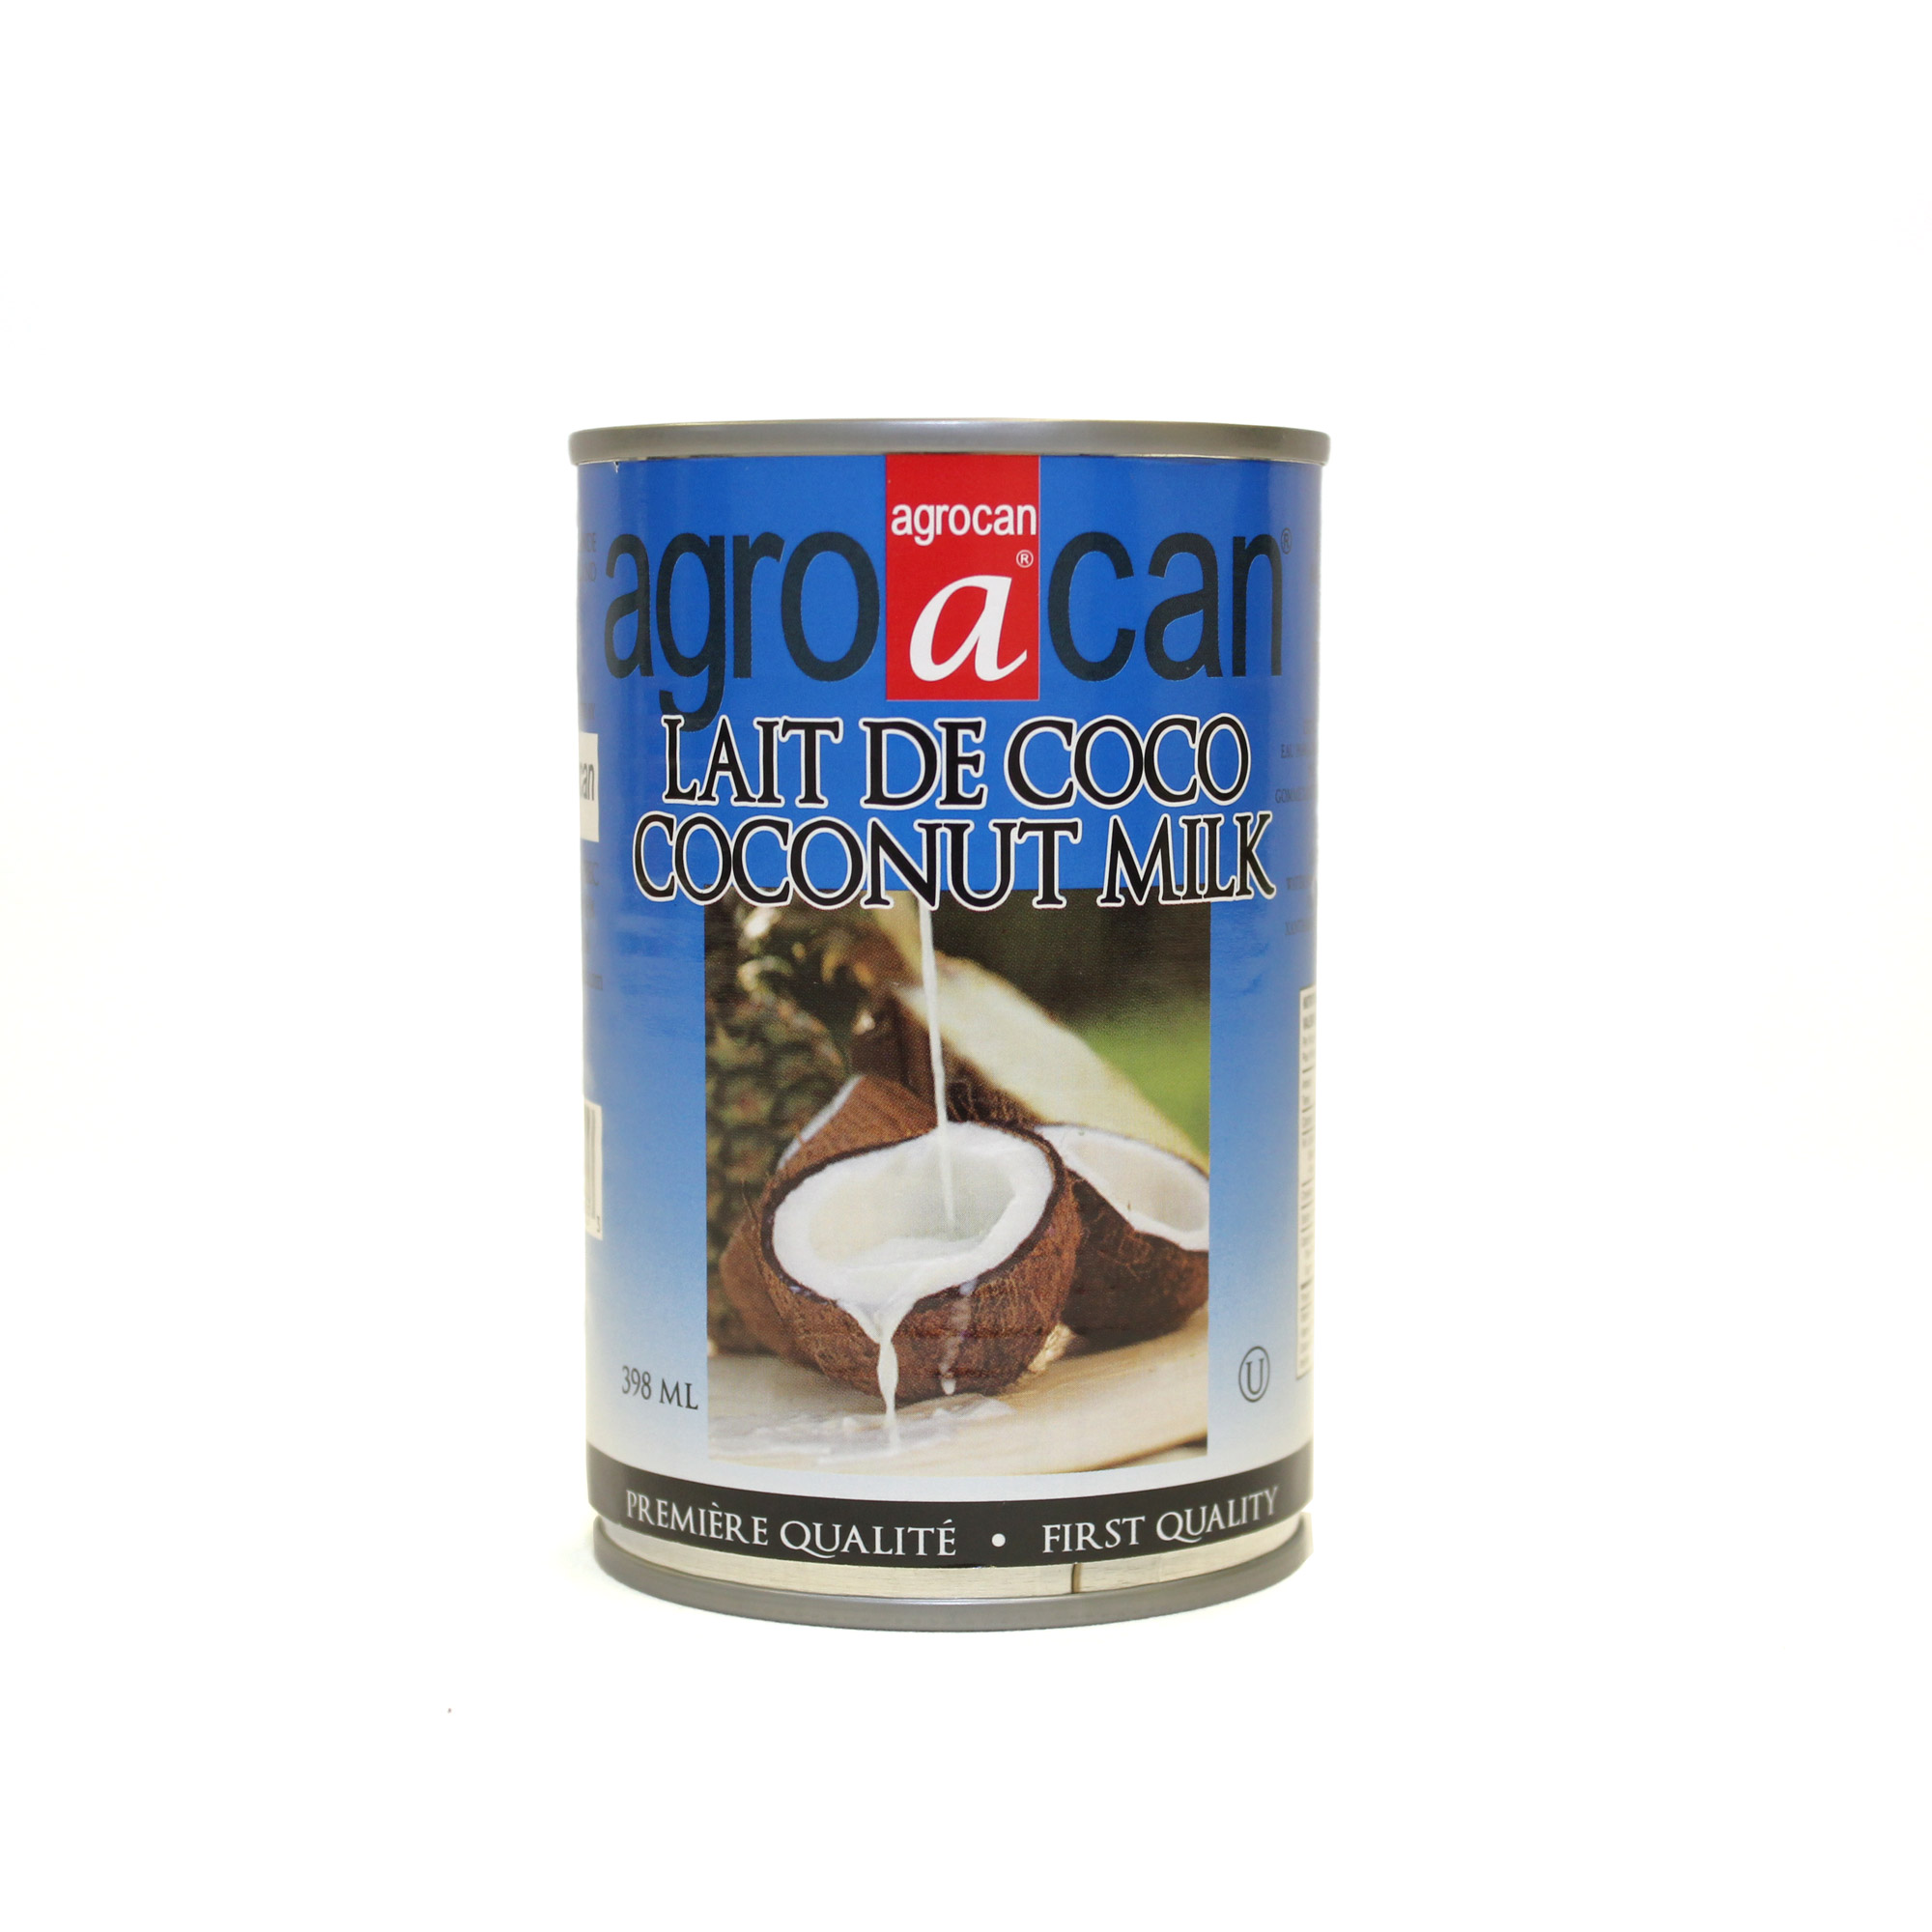 Coconut Milk – 398ml